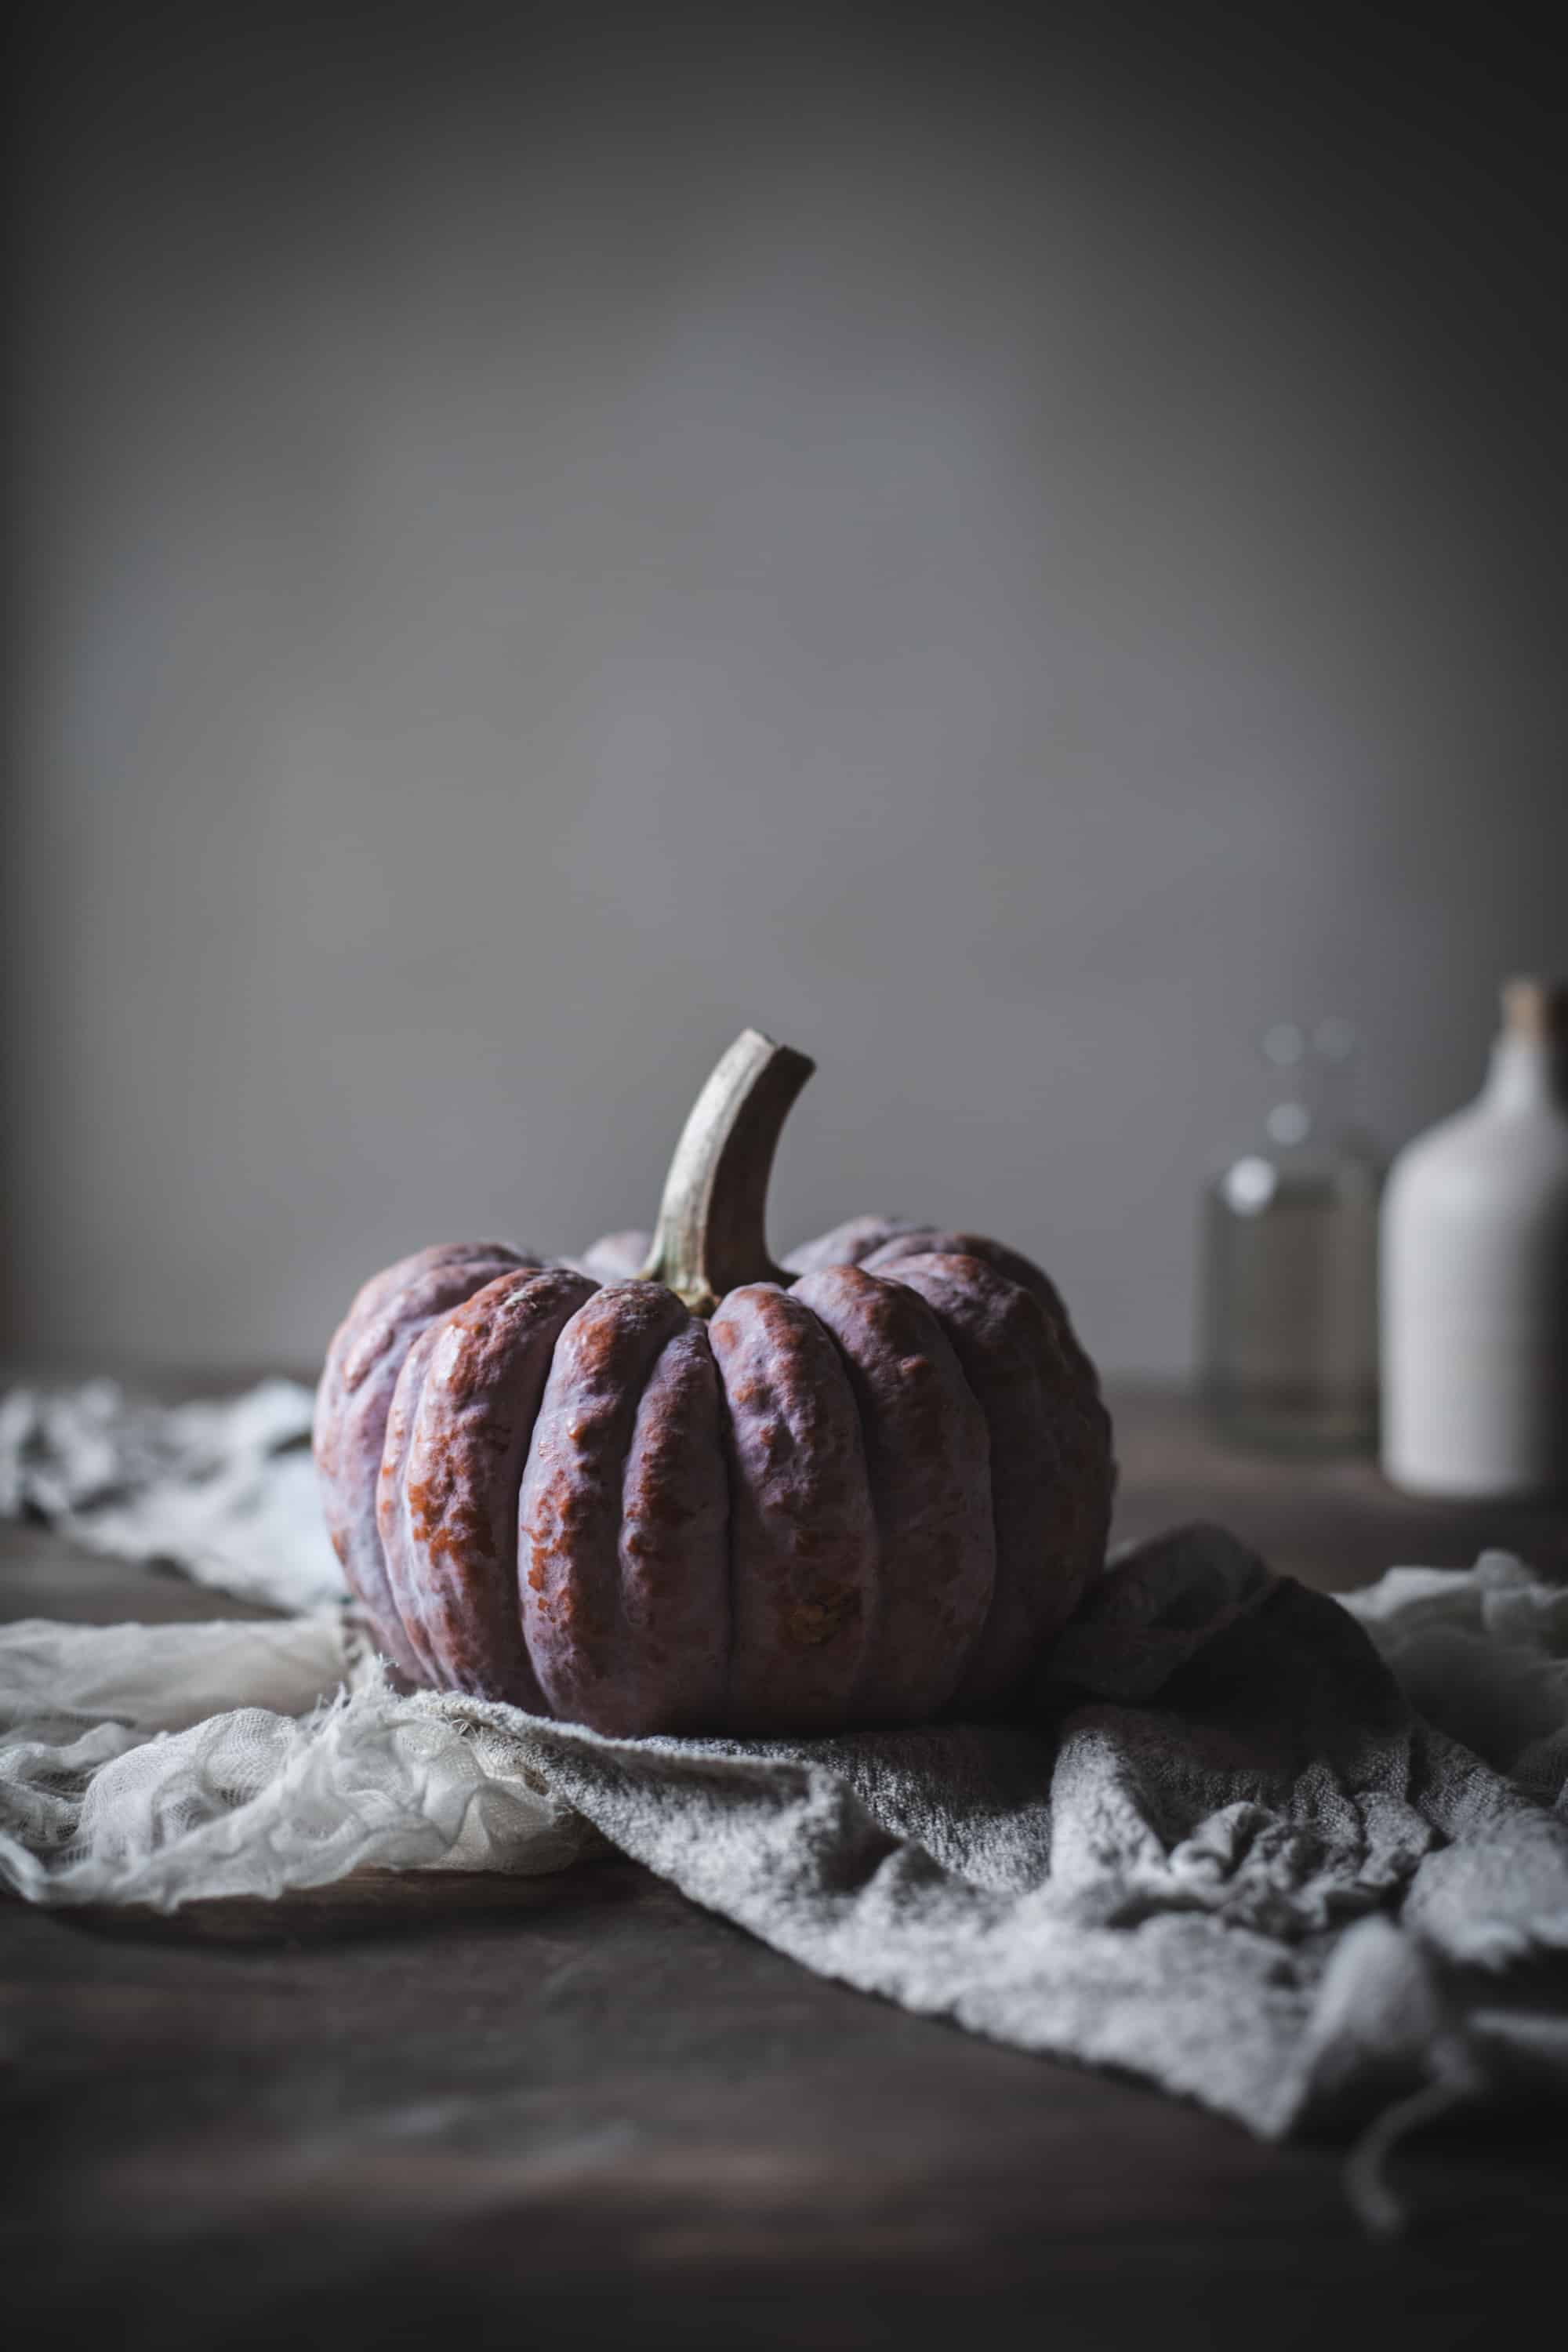 Crispy Pumpkin Gnocchi with Brown Butter Tarragon and Hazelnuts by Eva Kosmas Flores